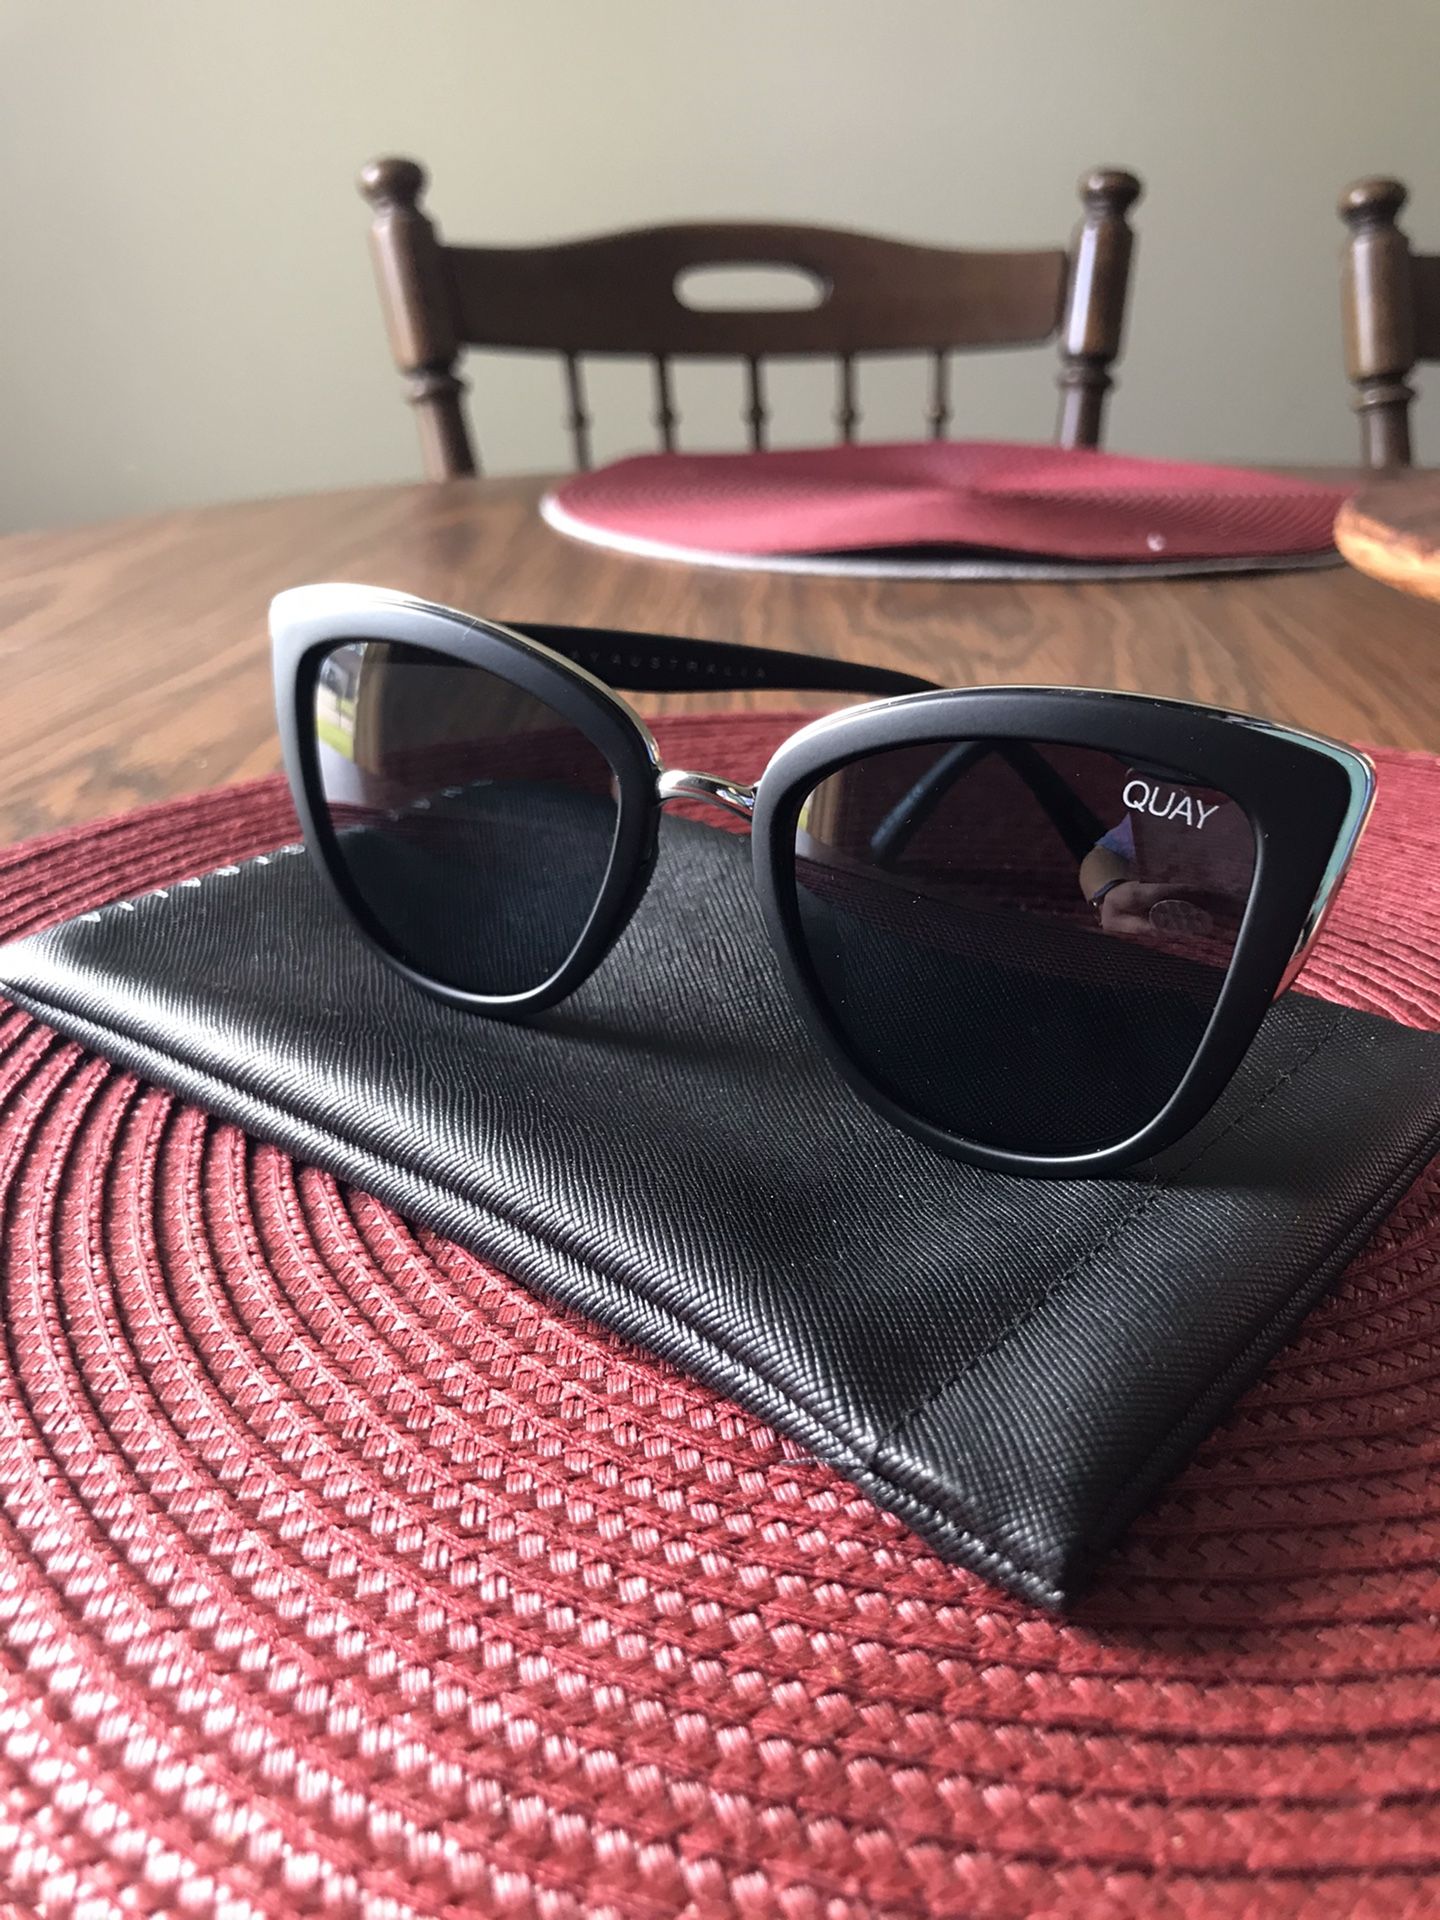 Quay “my girl” sunglasses